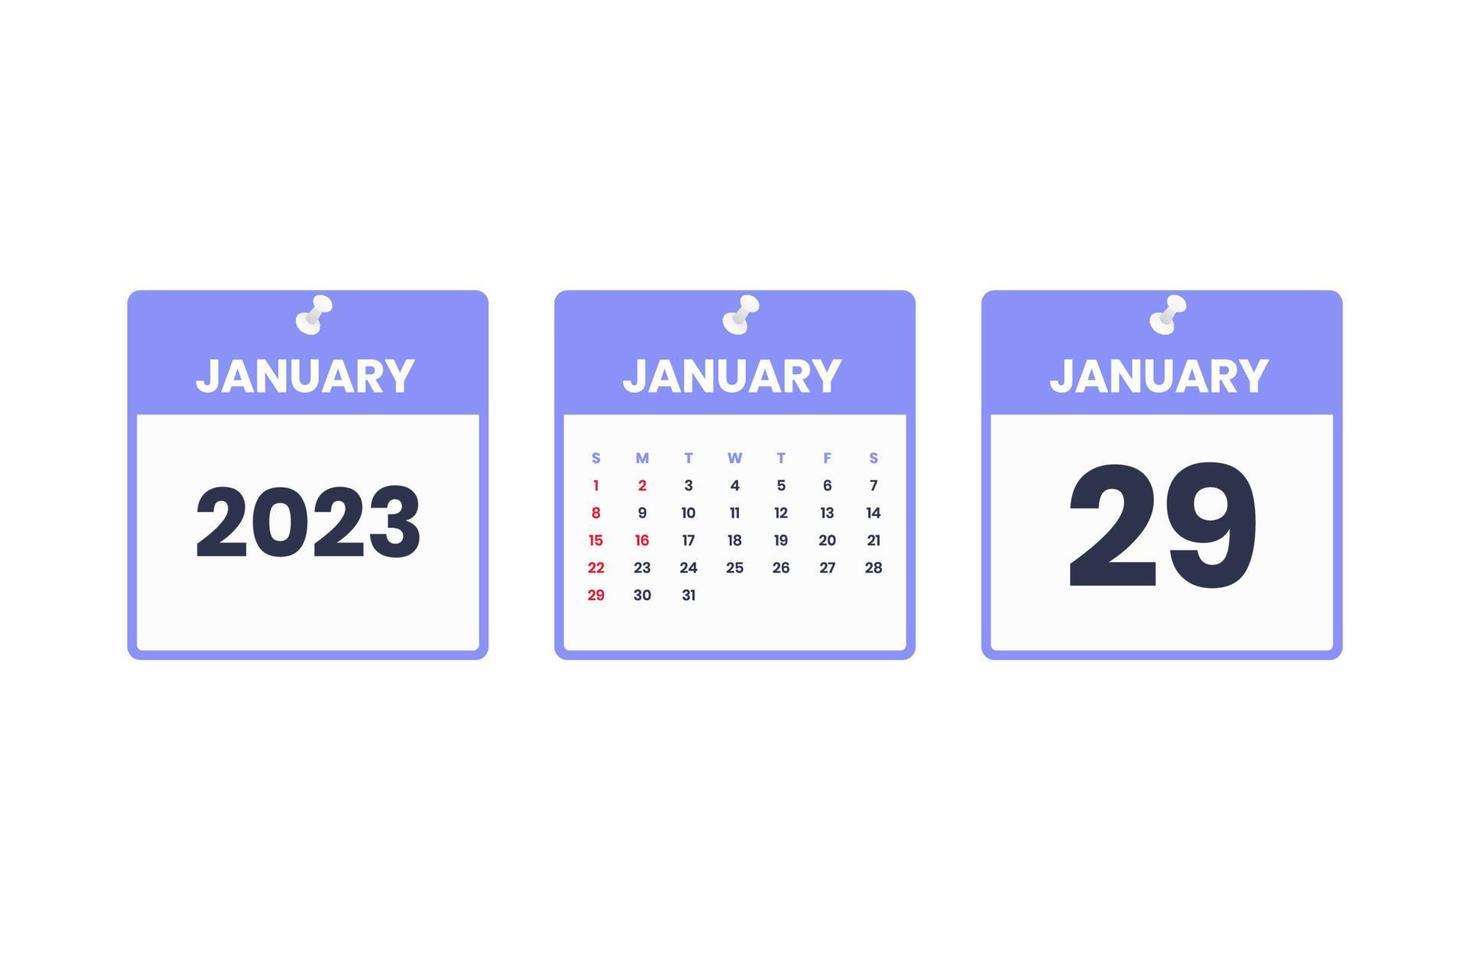 Januar Kalenderdesign. 29. januar 2023 kalendersymbol für zeitplan, termin, wichtiges datumskonzept vektor